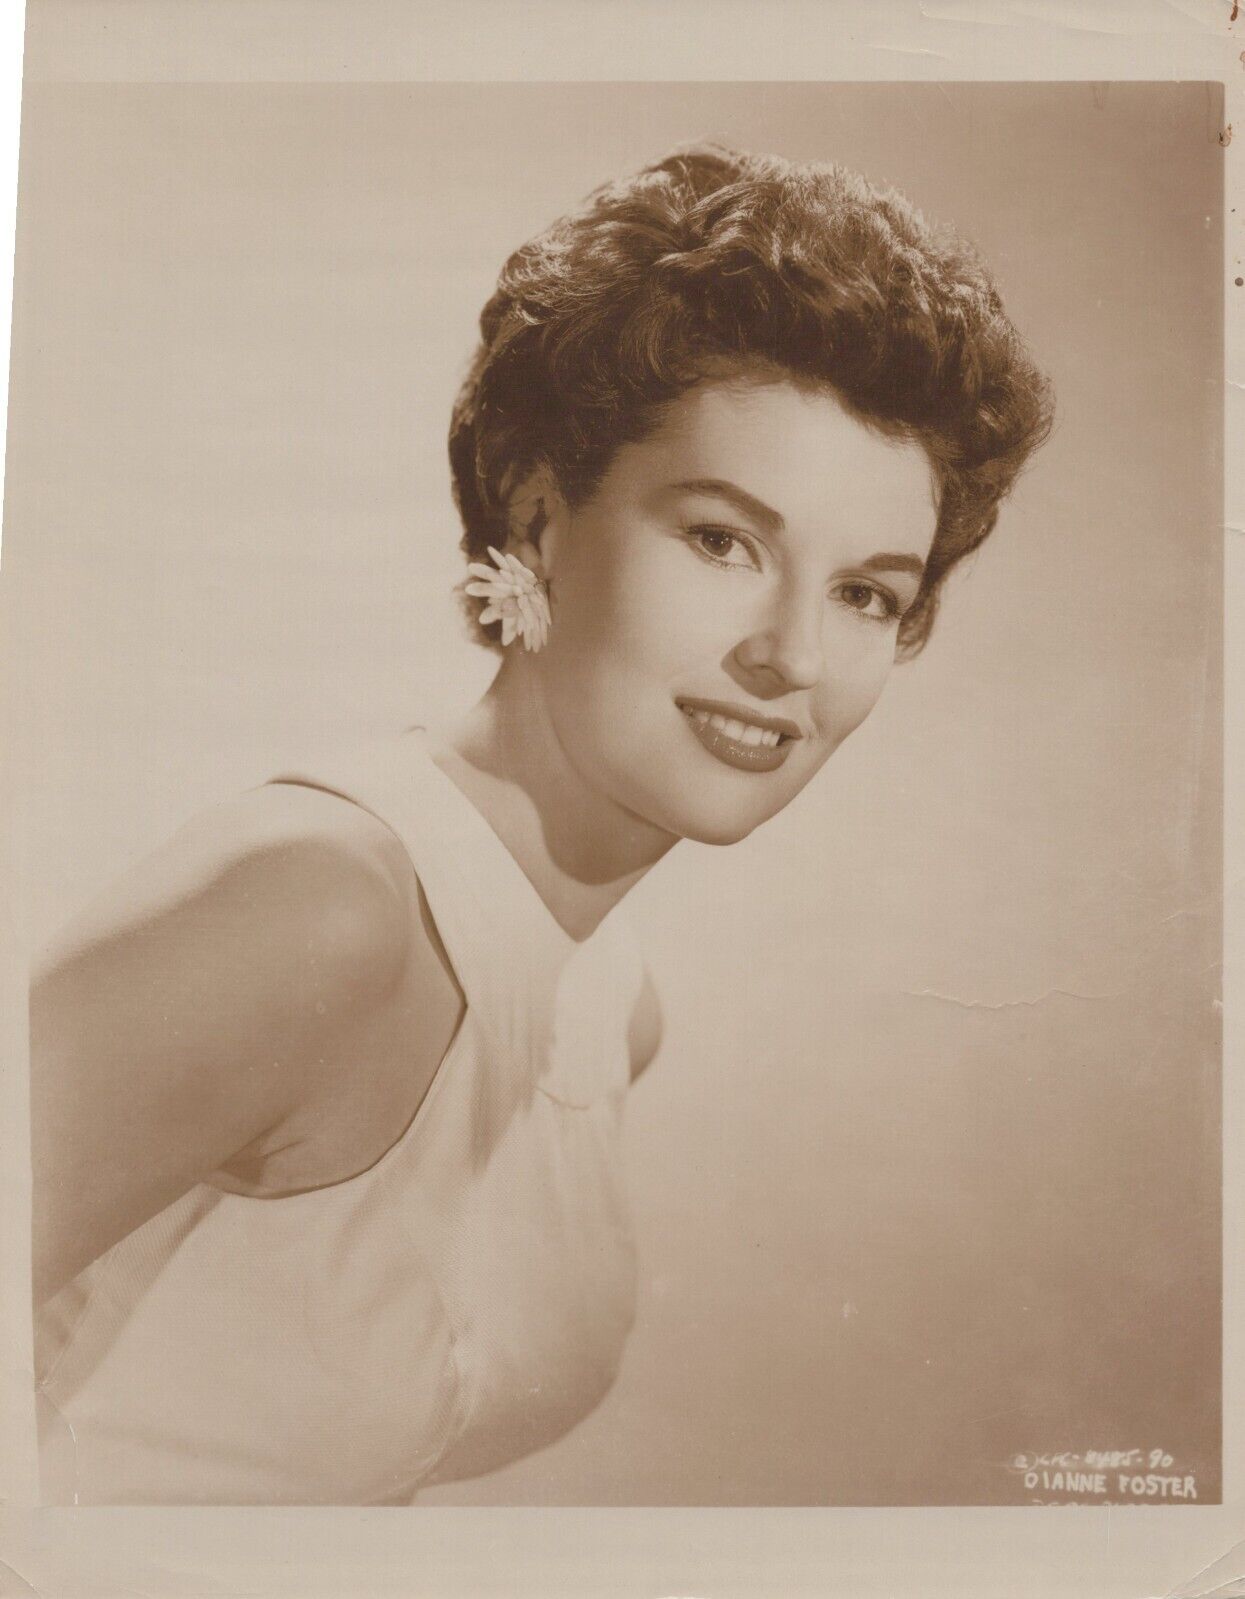 Dianne Foster (1950s)🎬⭐ Hollywood beauty Original Vintage Movie Photo K 144